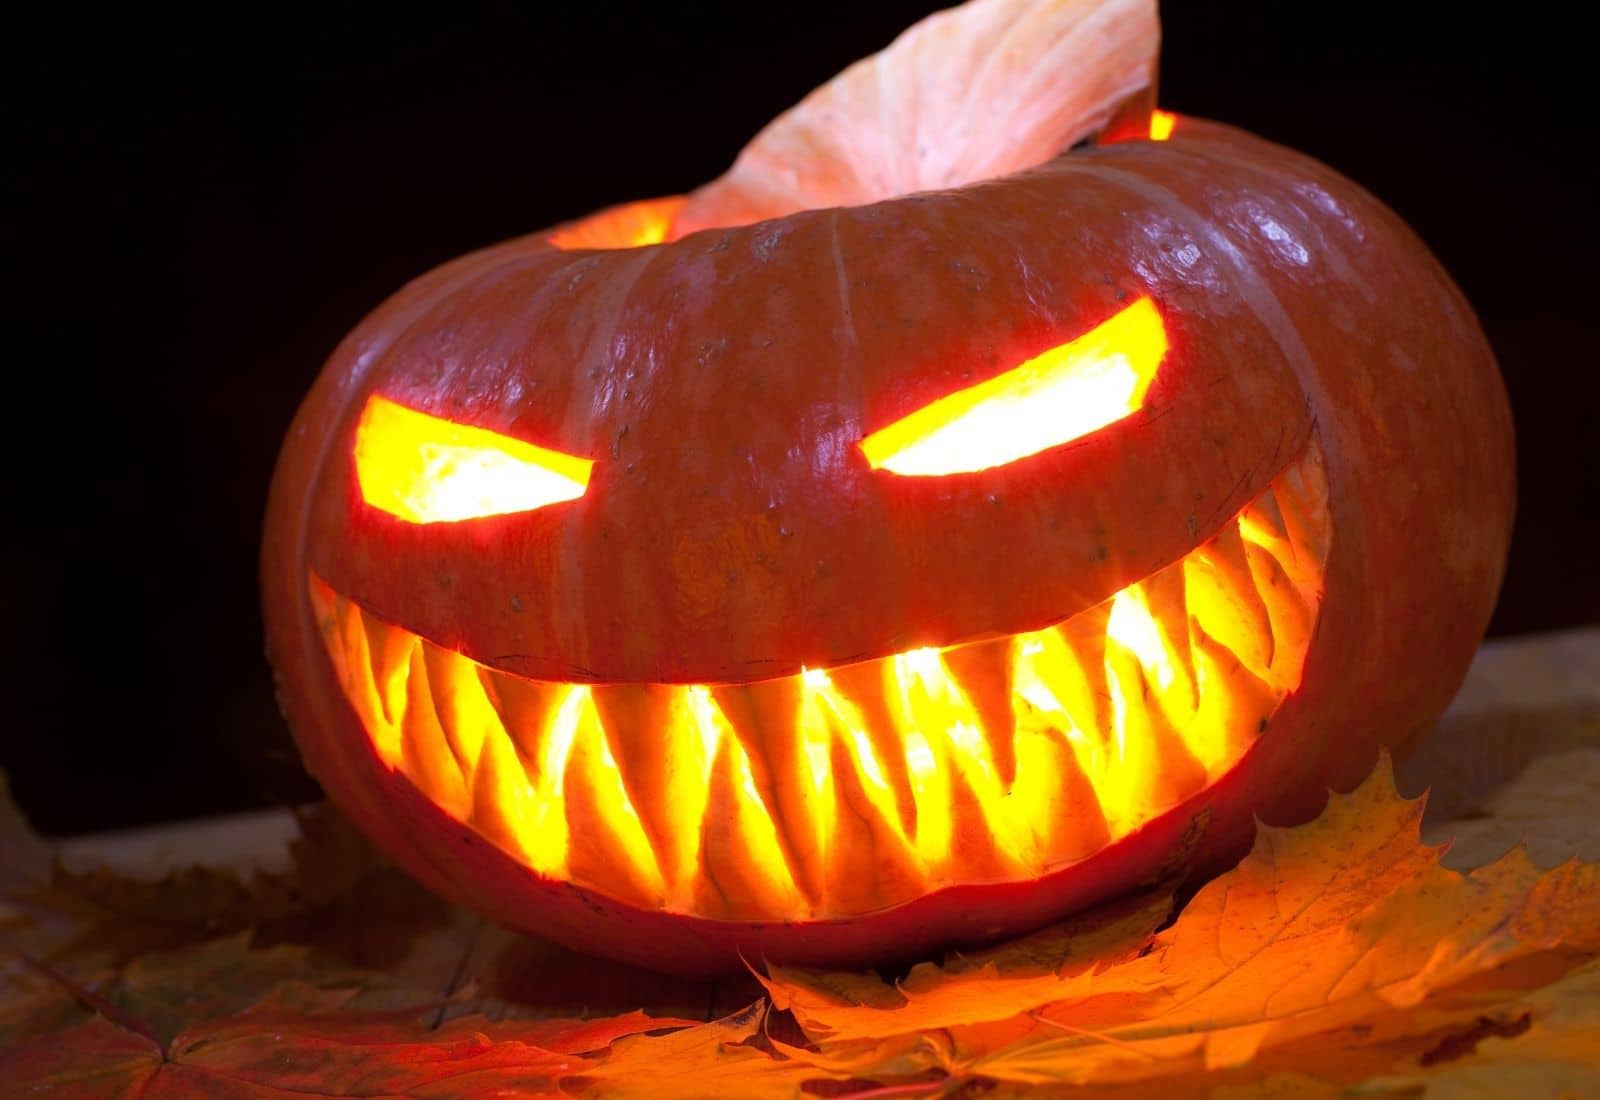 Scary jack-o-lantern face carvings